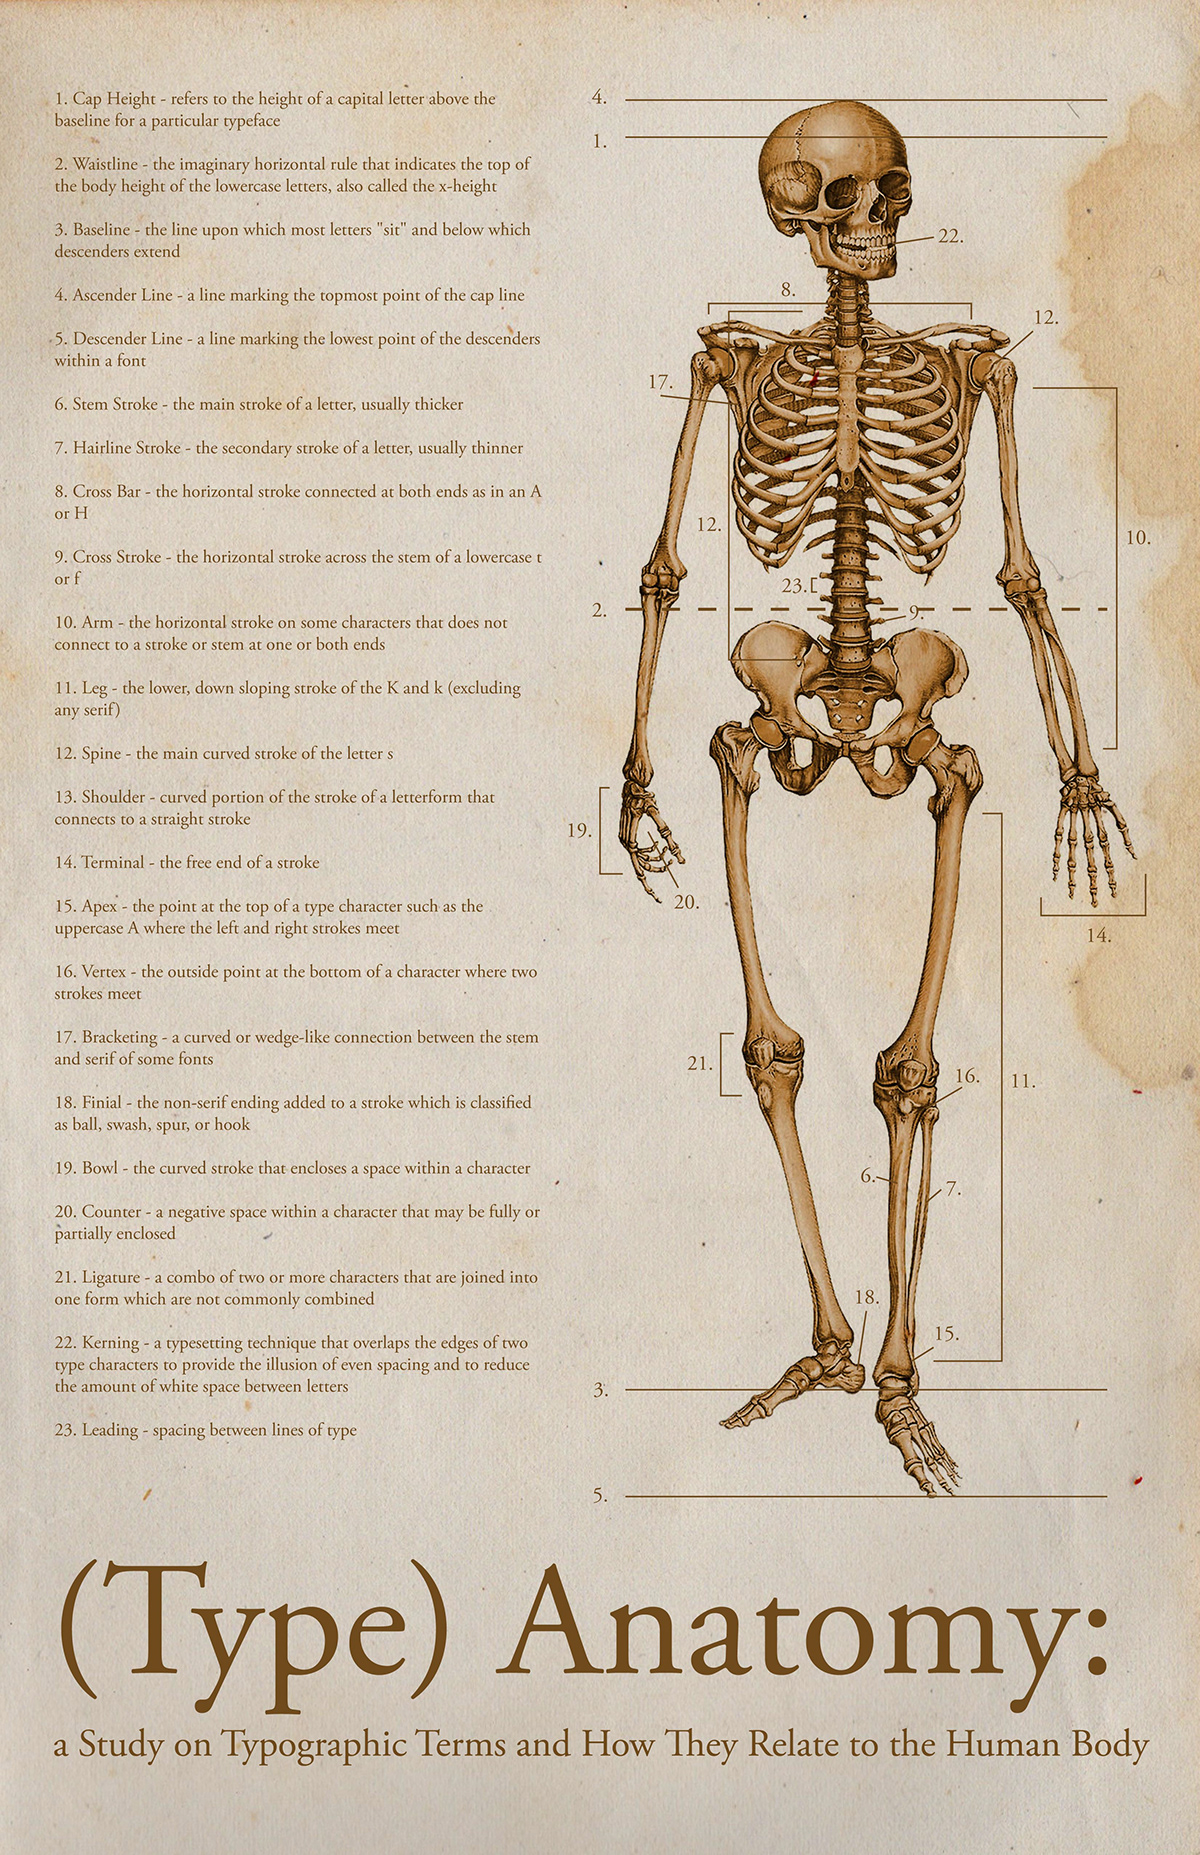 Type Anatomy skeletons pumikin kristen parham